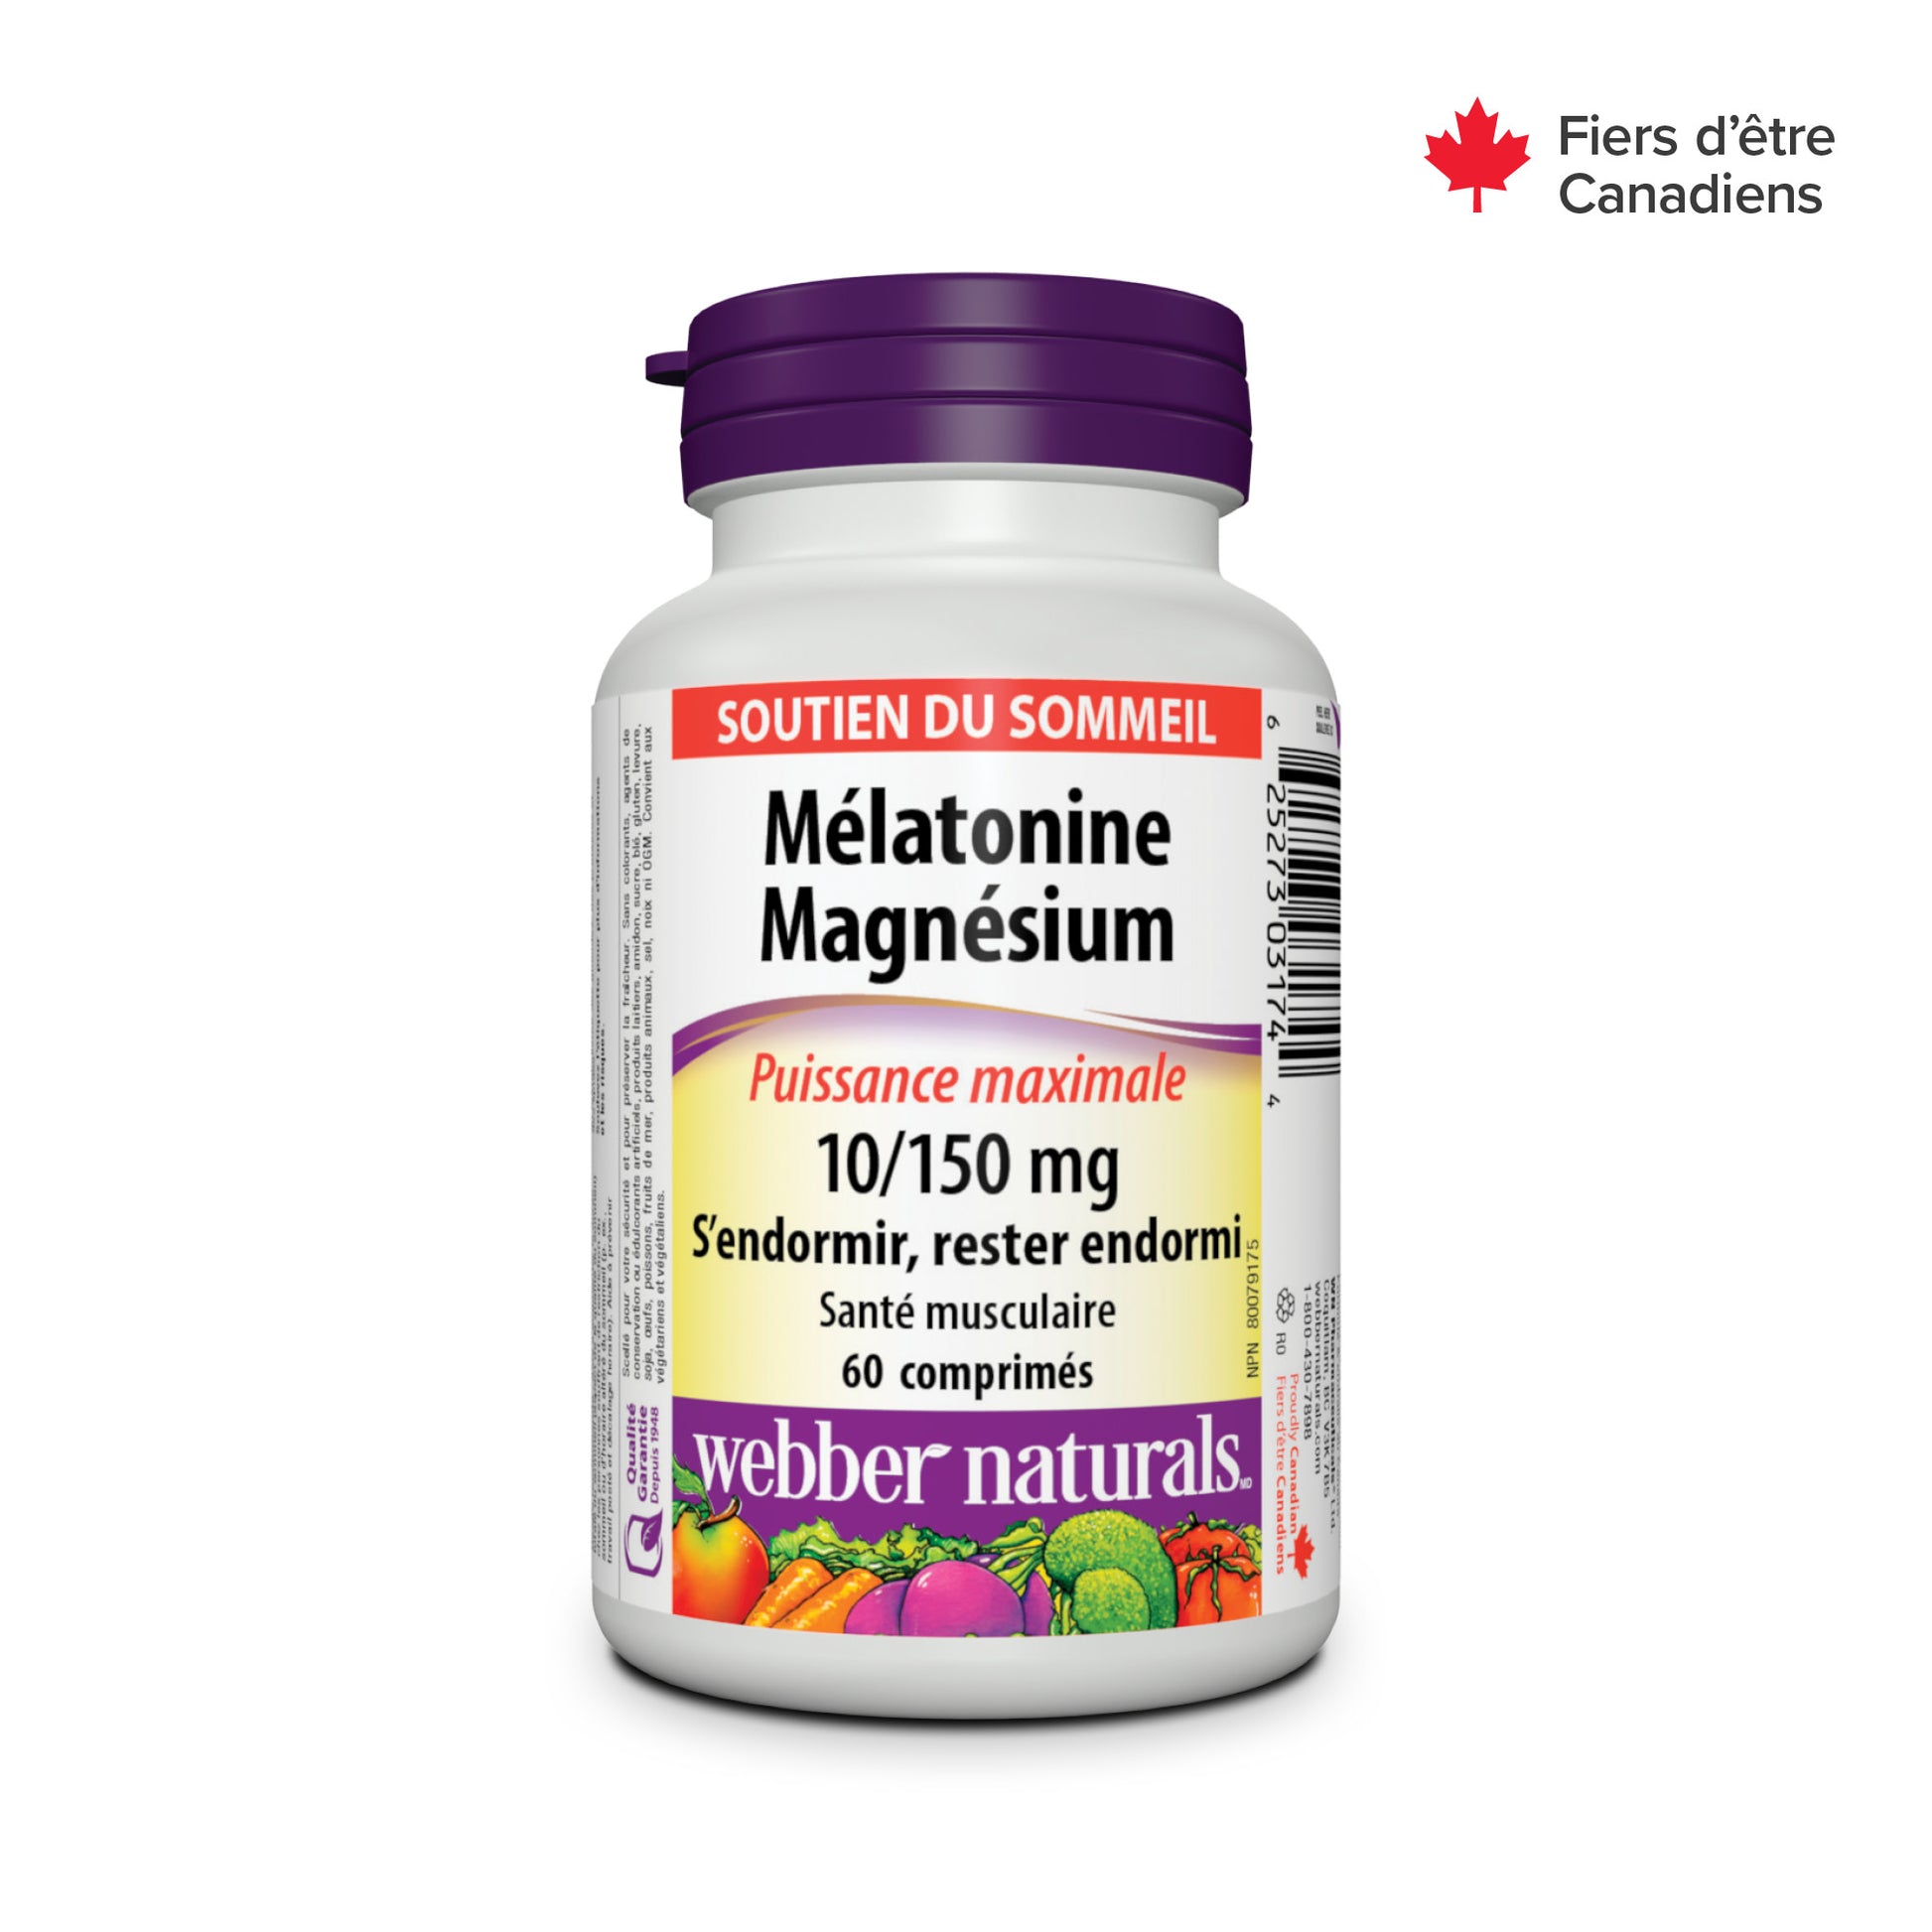 Mélatonine Magnésium Puissance maximale 10/150 mg for Webber Naturals|v|hi-res|WN3174